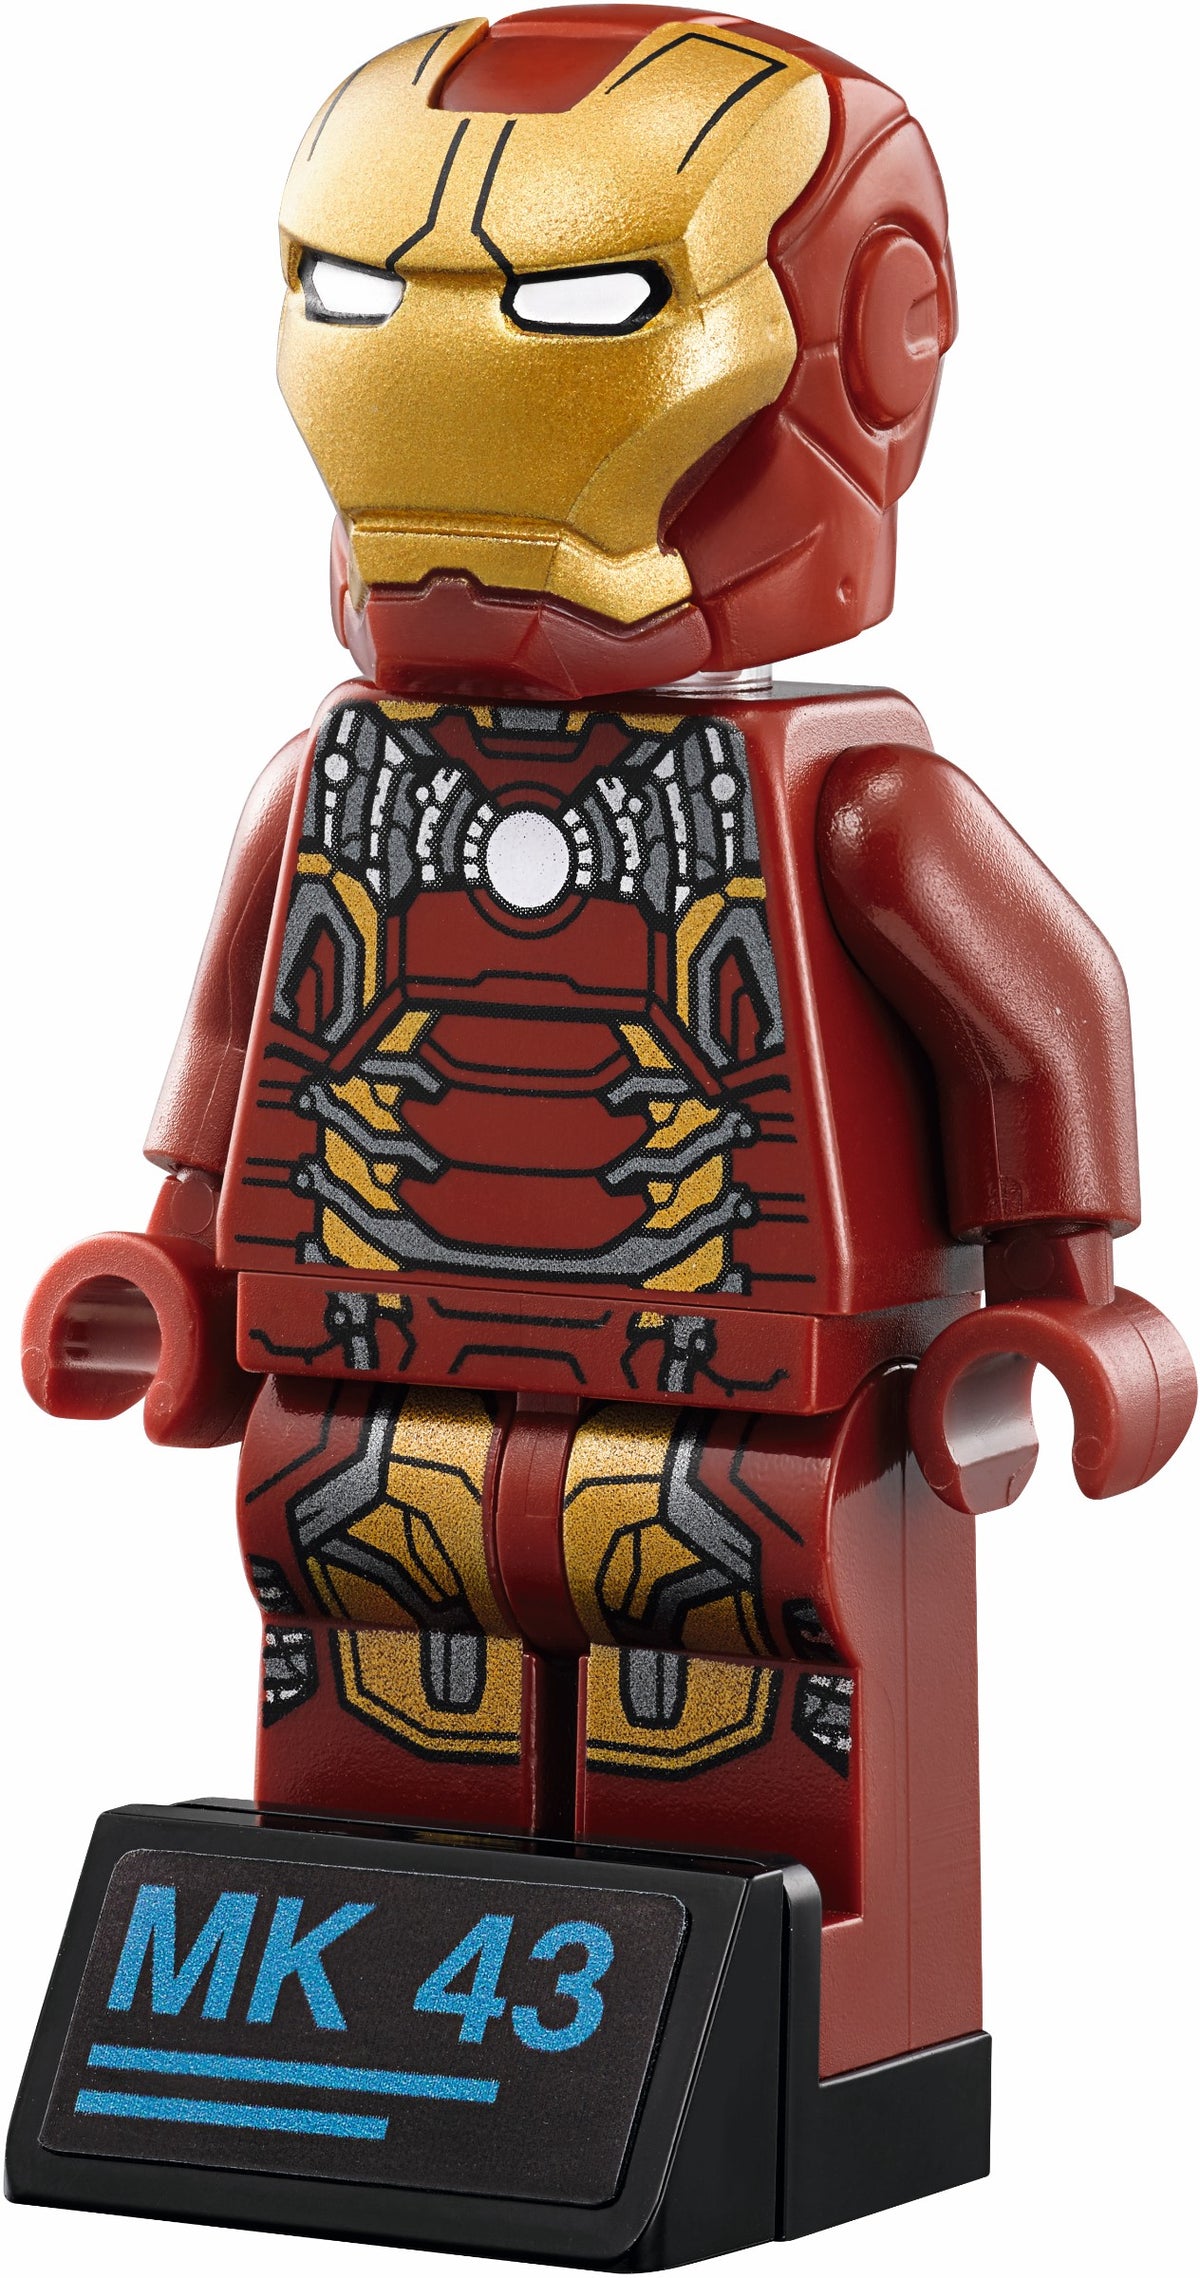 LEGO Marvel Super Heroes 76105 Avengers Infinity War - The Hulkbuster: Ultron Edition